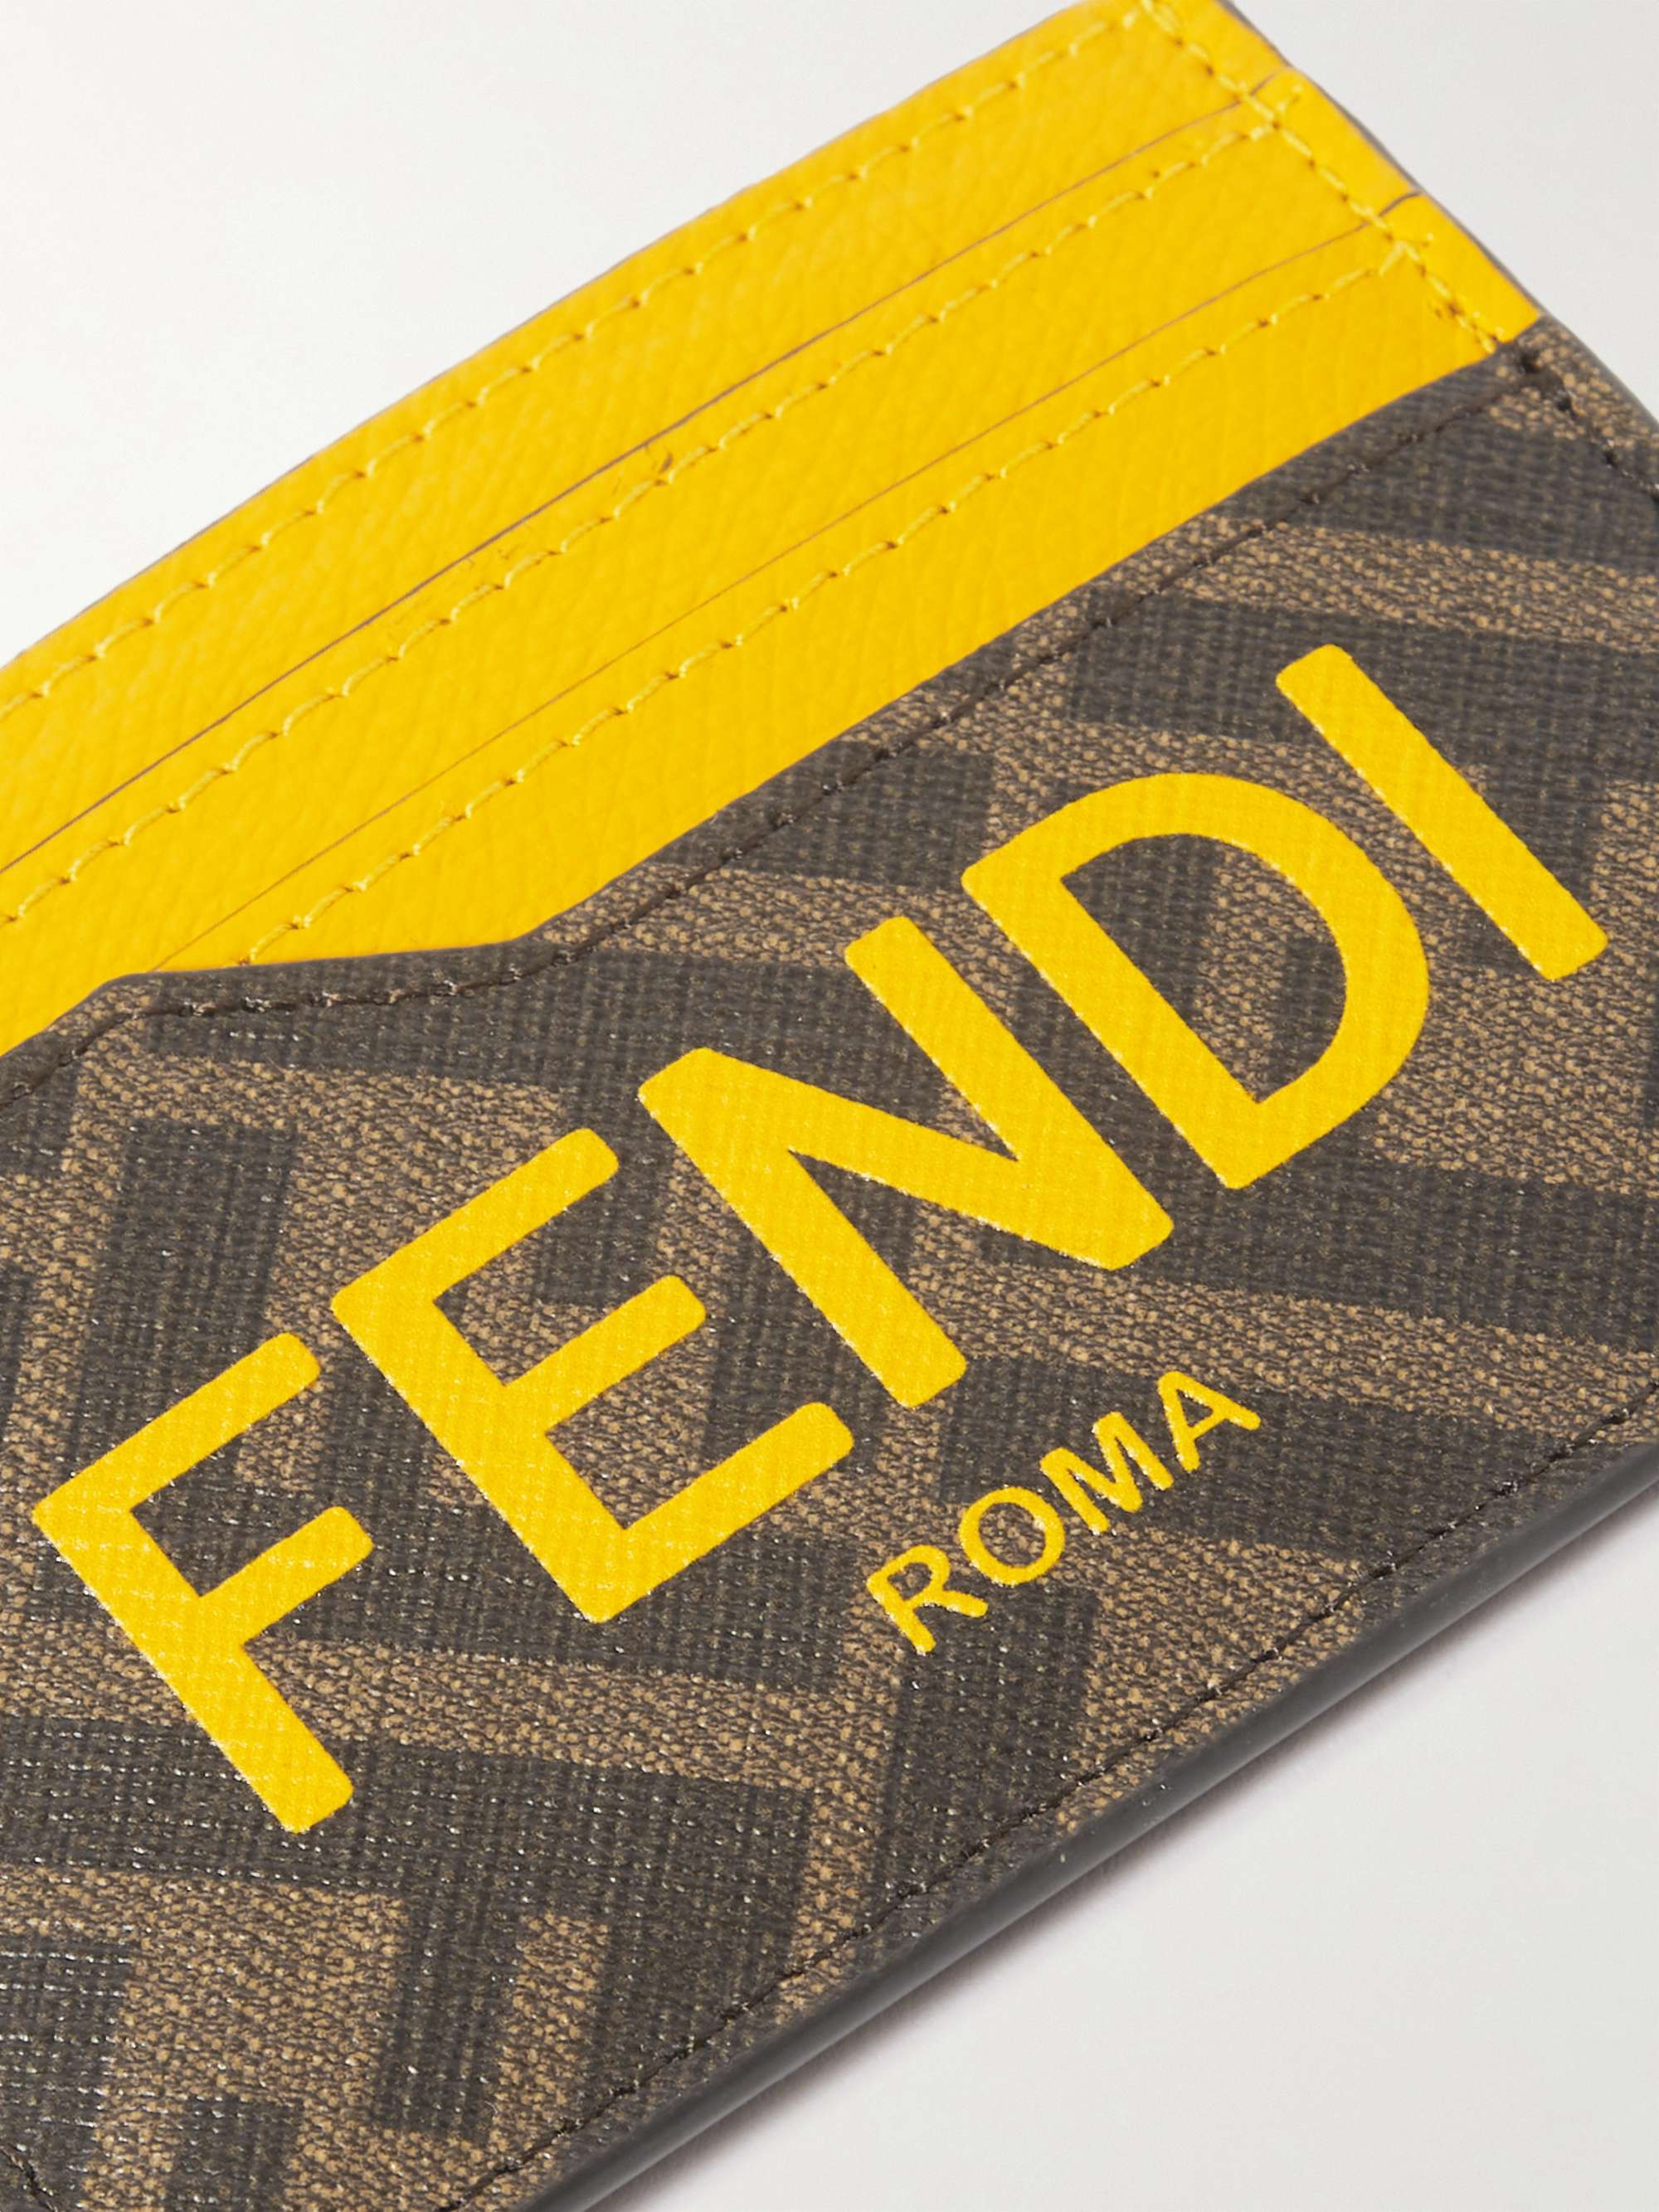 FENDI Logo-Print Coated-Canvas and Leather Cardholder